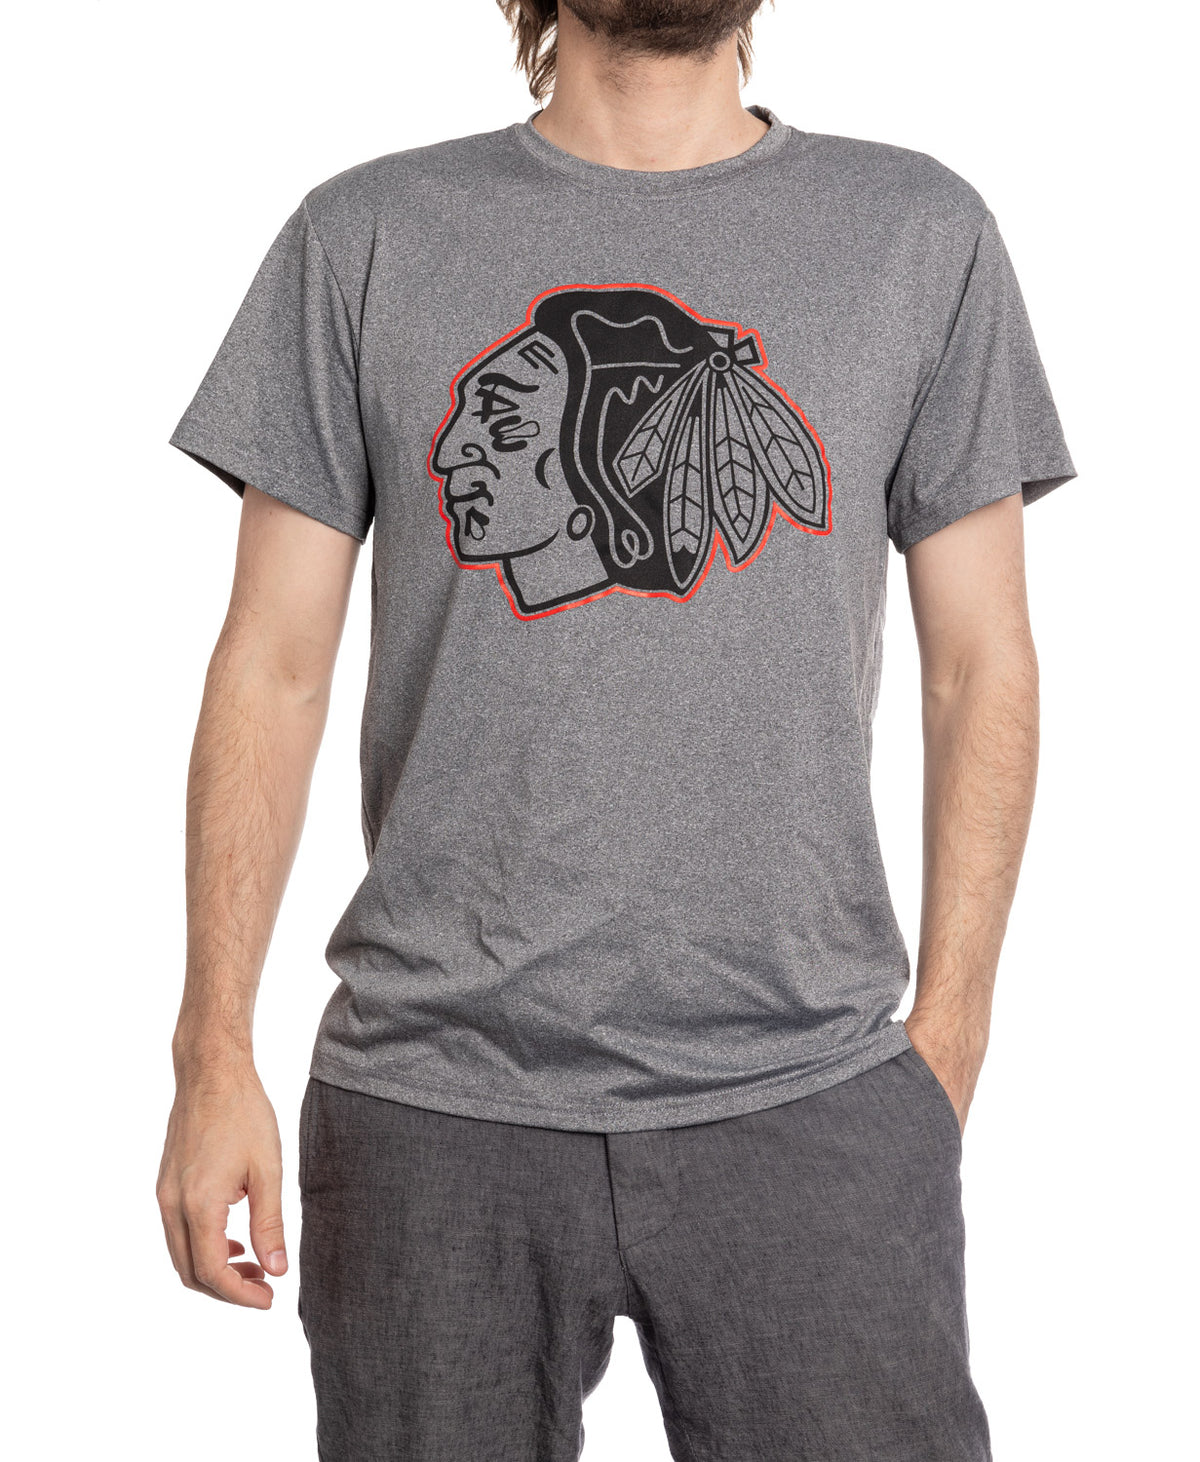 Chicago Blackhawks NHL Men's Performance Rash Guard Base Layer Moisture-Wicking T-Shirt - Grey